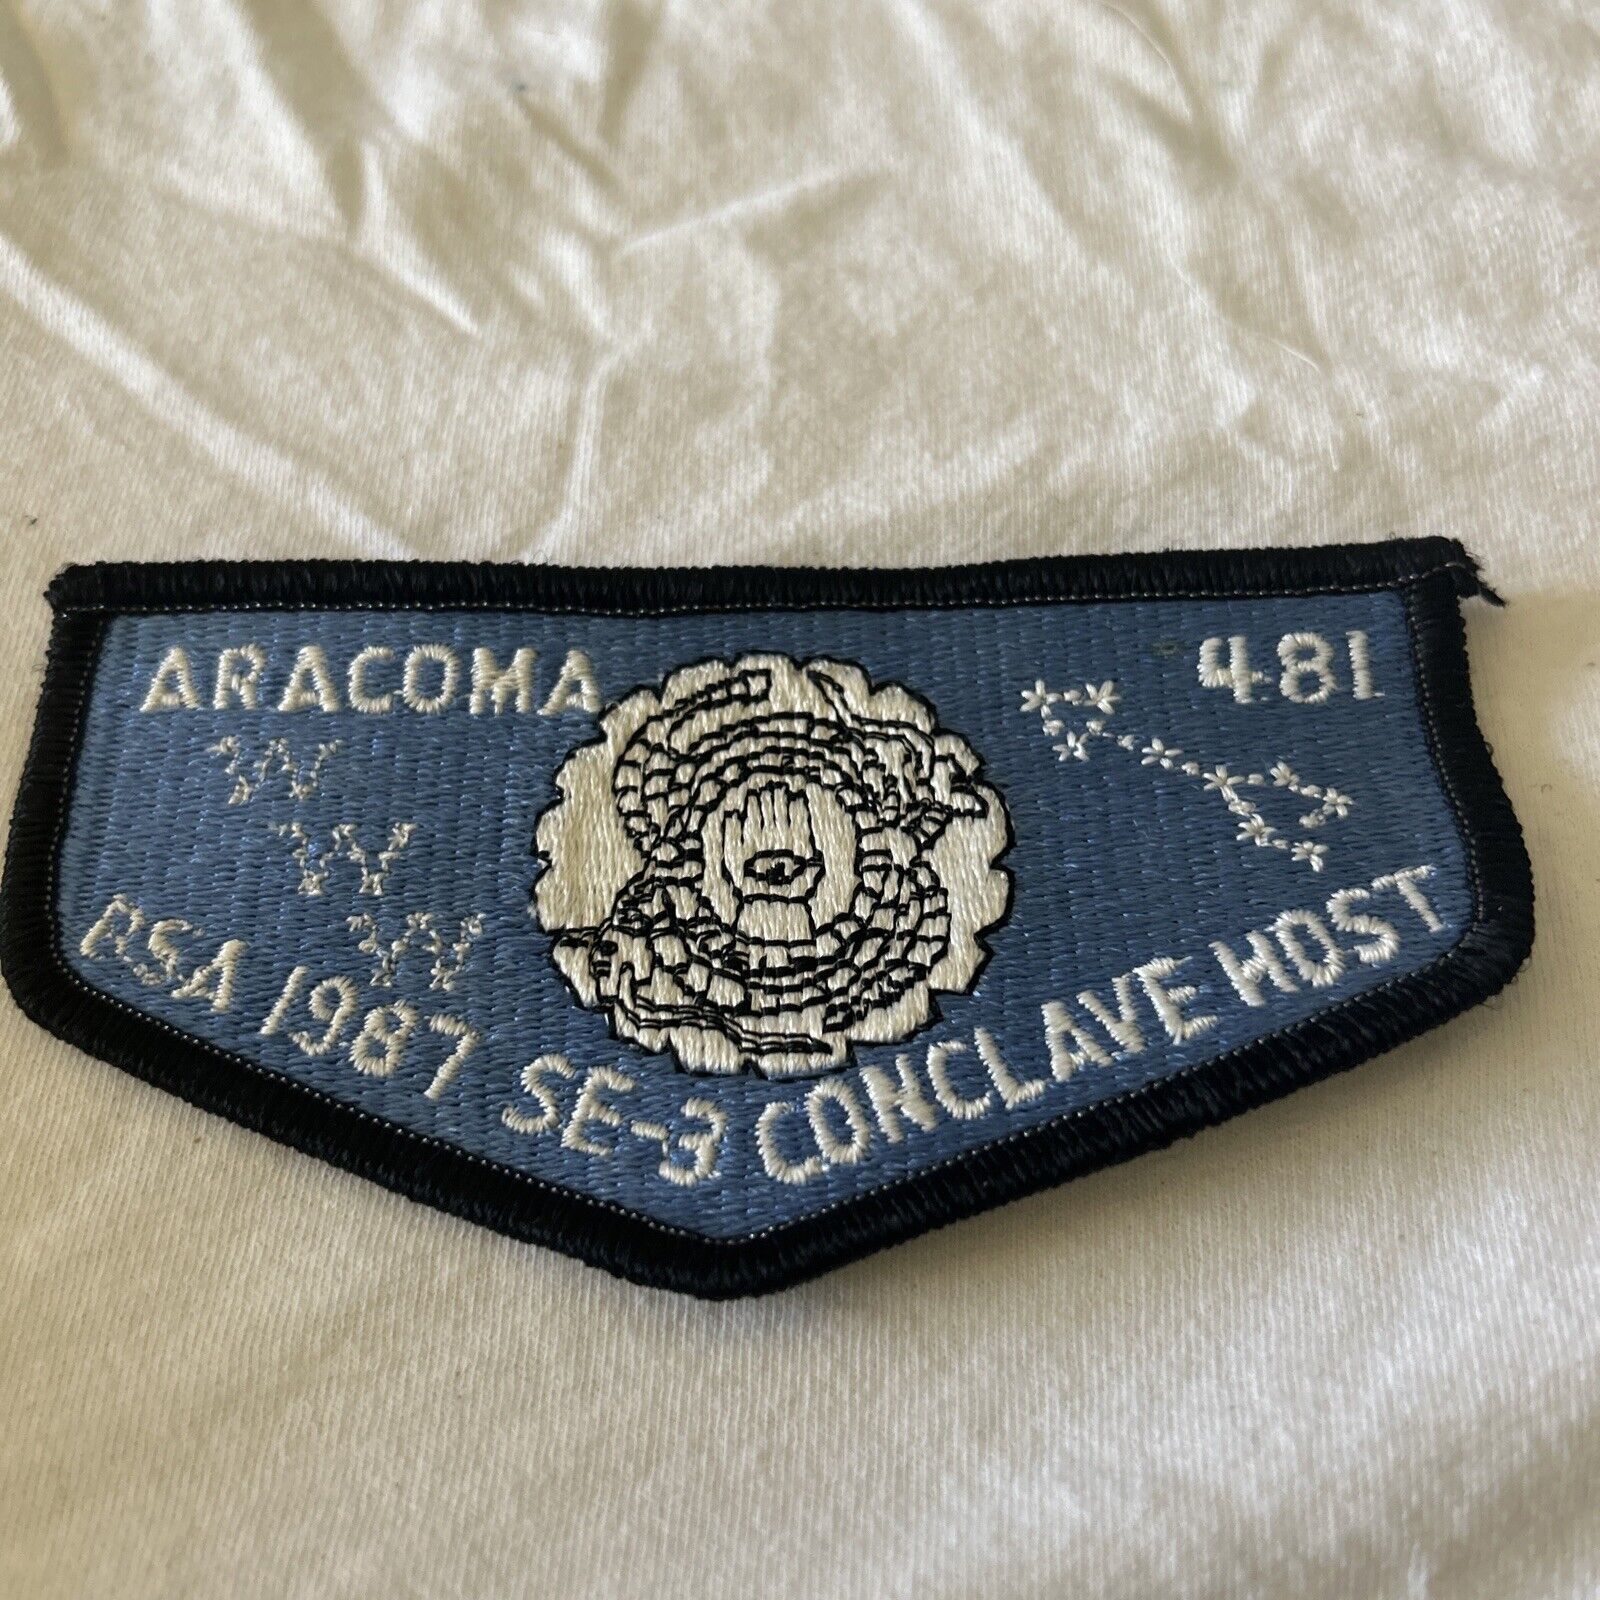 Aracoma Lodge 481 Black Warrior Council, Alabama , 1987 Conclave Host